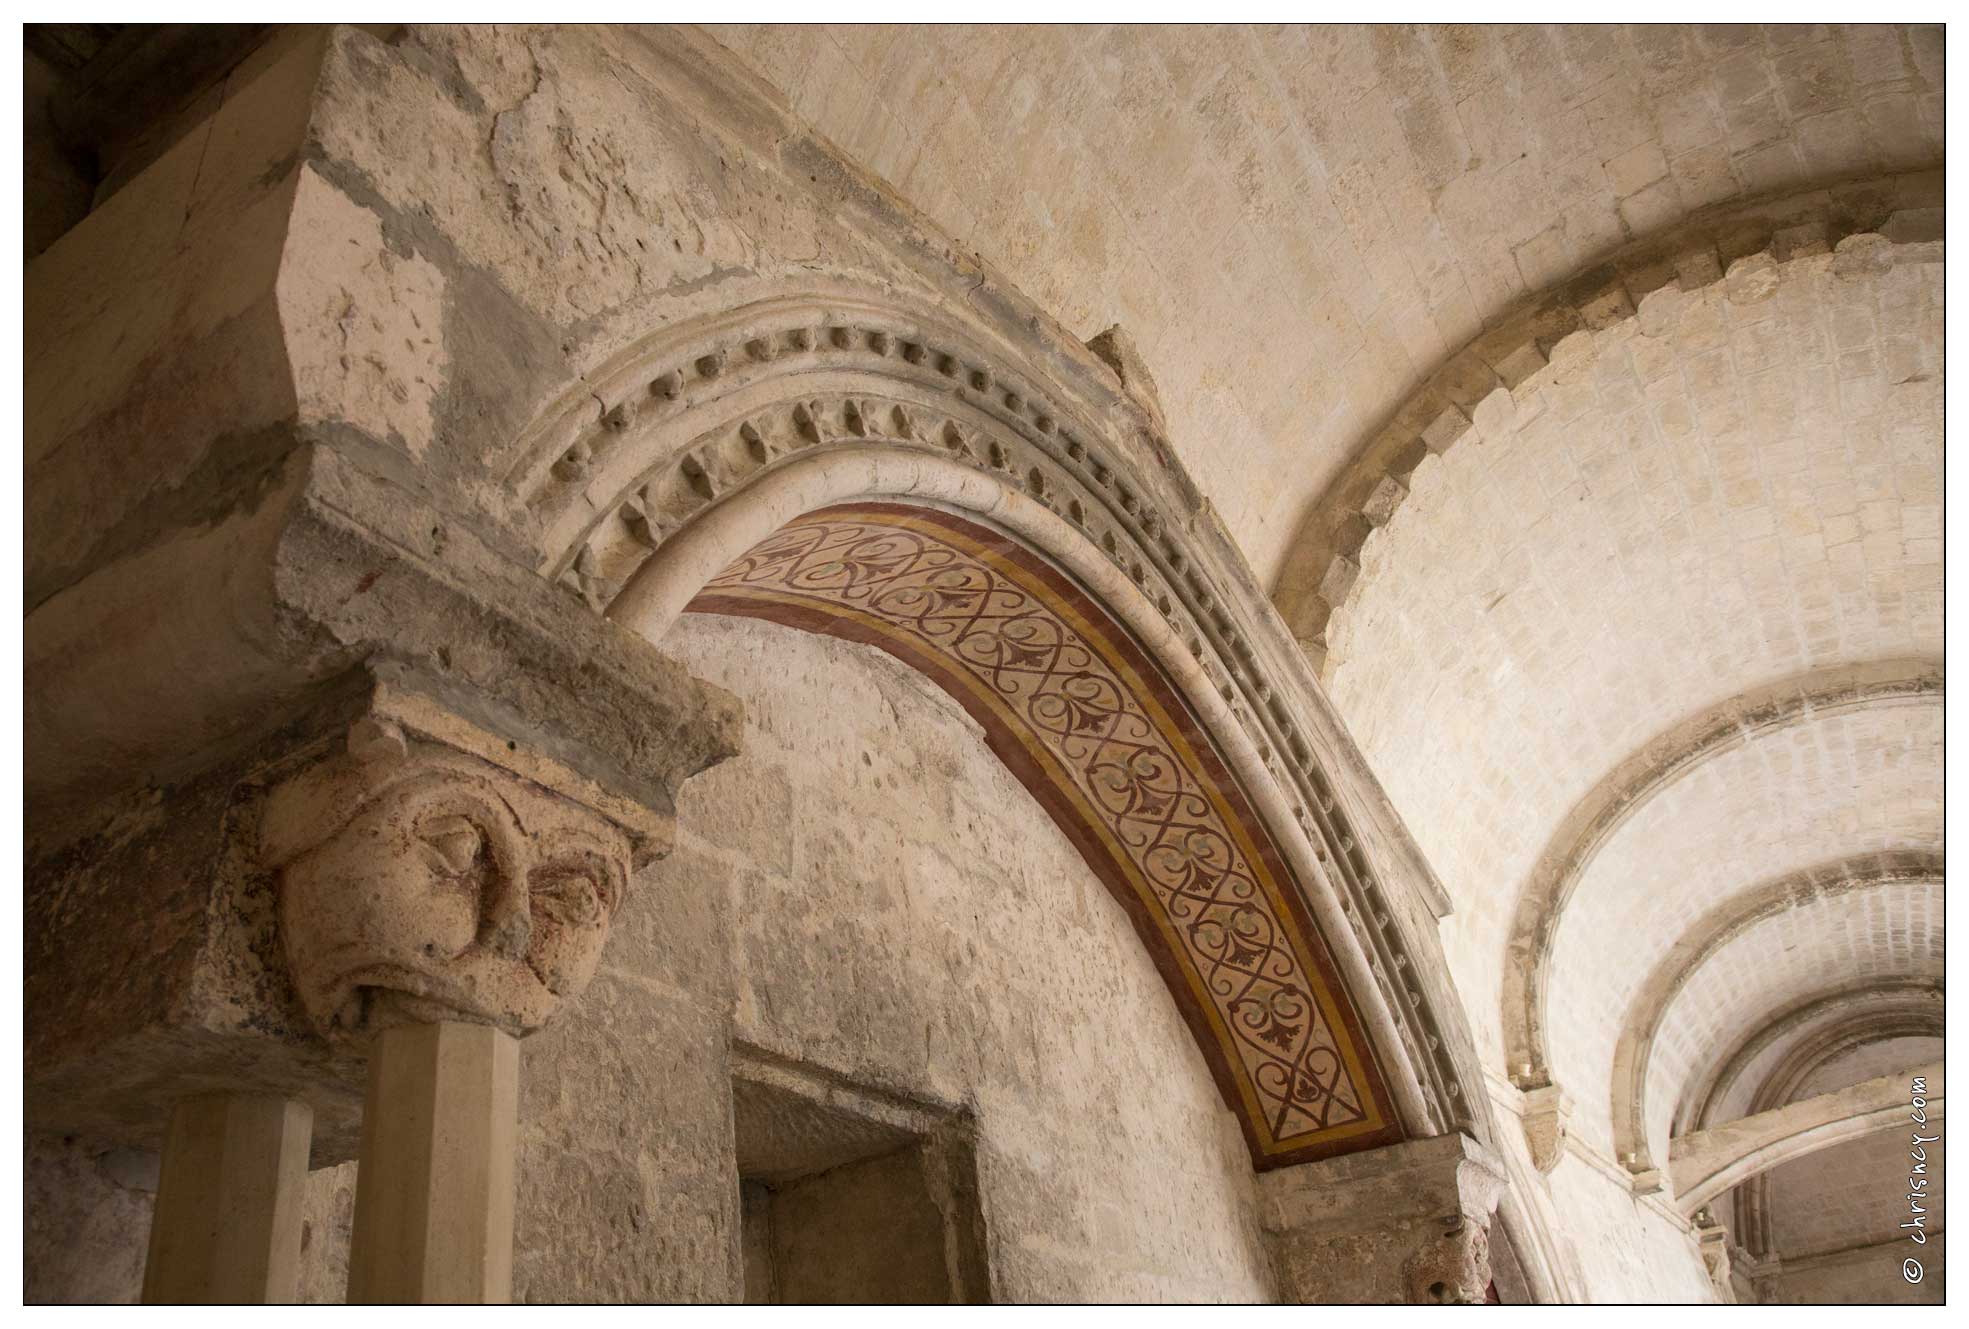 20160123-16_6737-Arles_Abbaye_de_Montmajour_le_cloitre.jpg